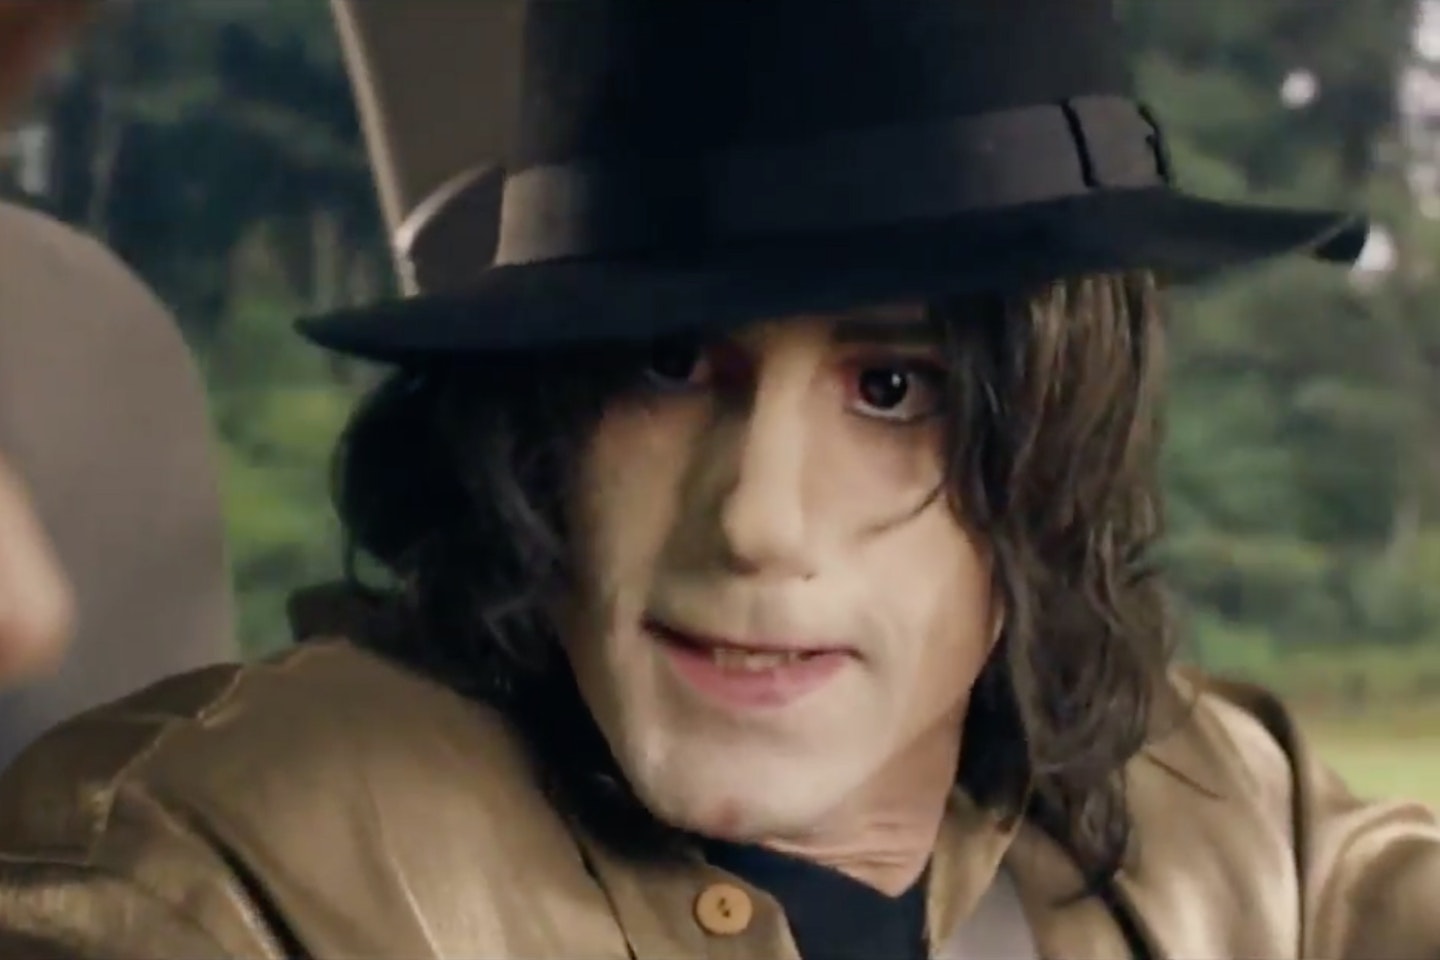 Michael Jackson family members blast Joseph Fiennes portrayal in Urban Myths